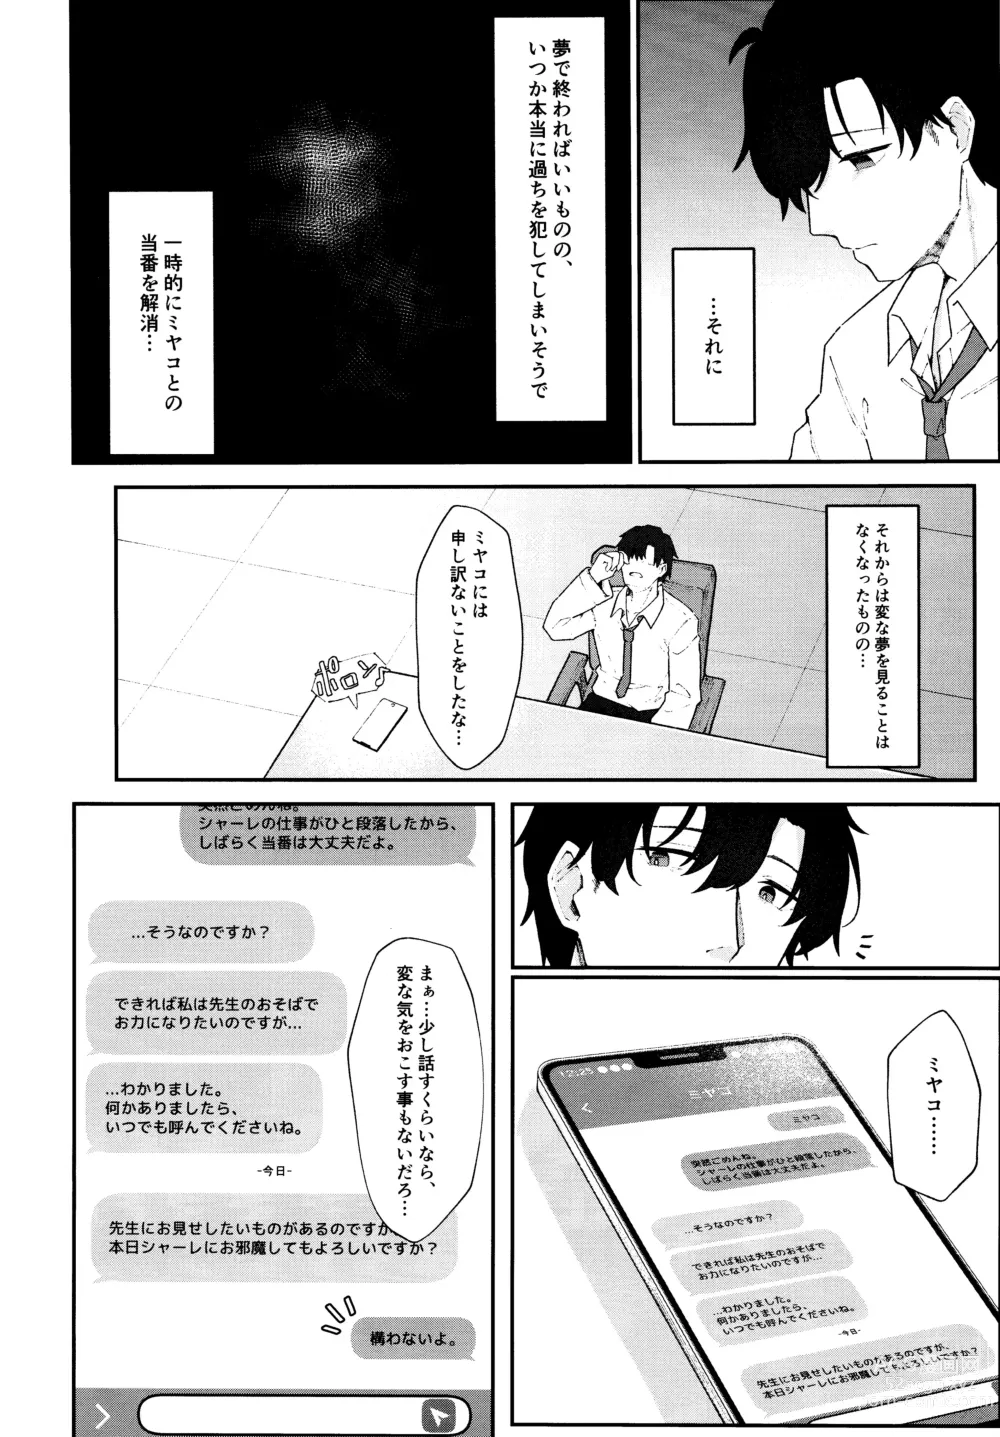 Page 11 of doujinshi Usagiana ni Ochiru - down the RABBIT1 hole...